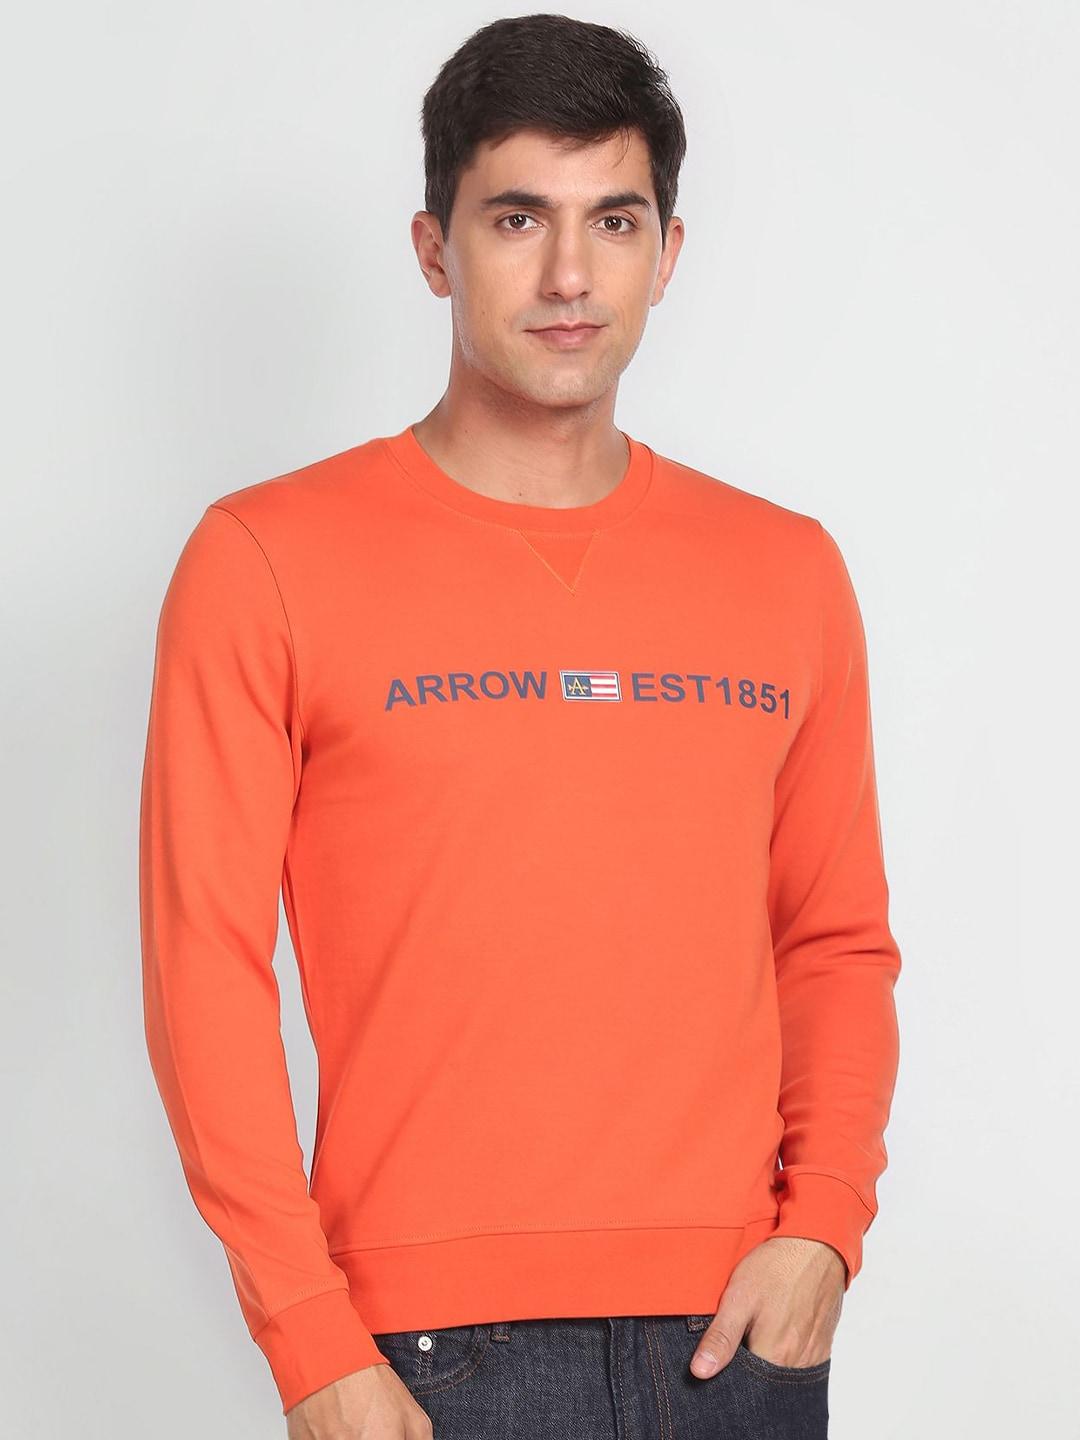 arrow-sport-typography-printed-sweatshirt